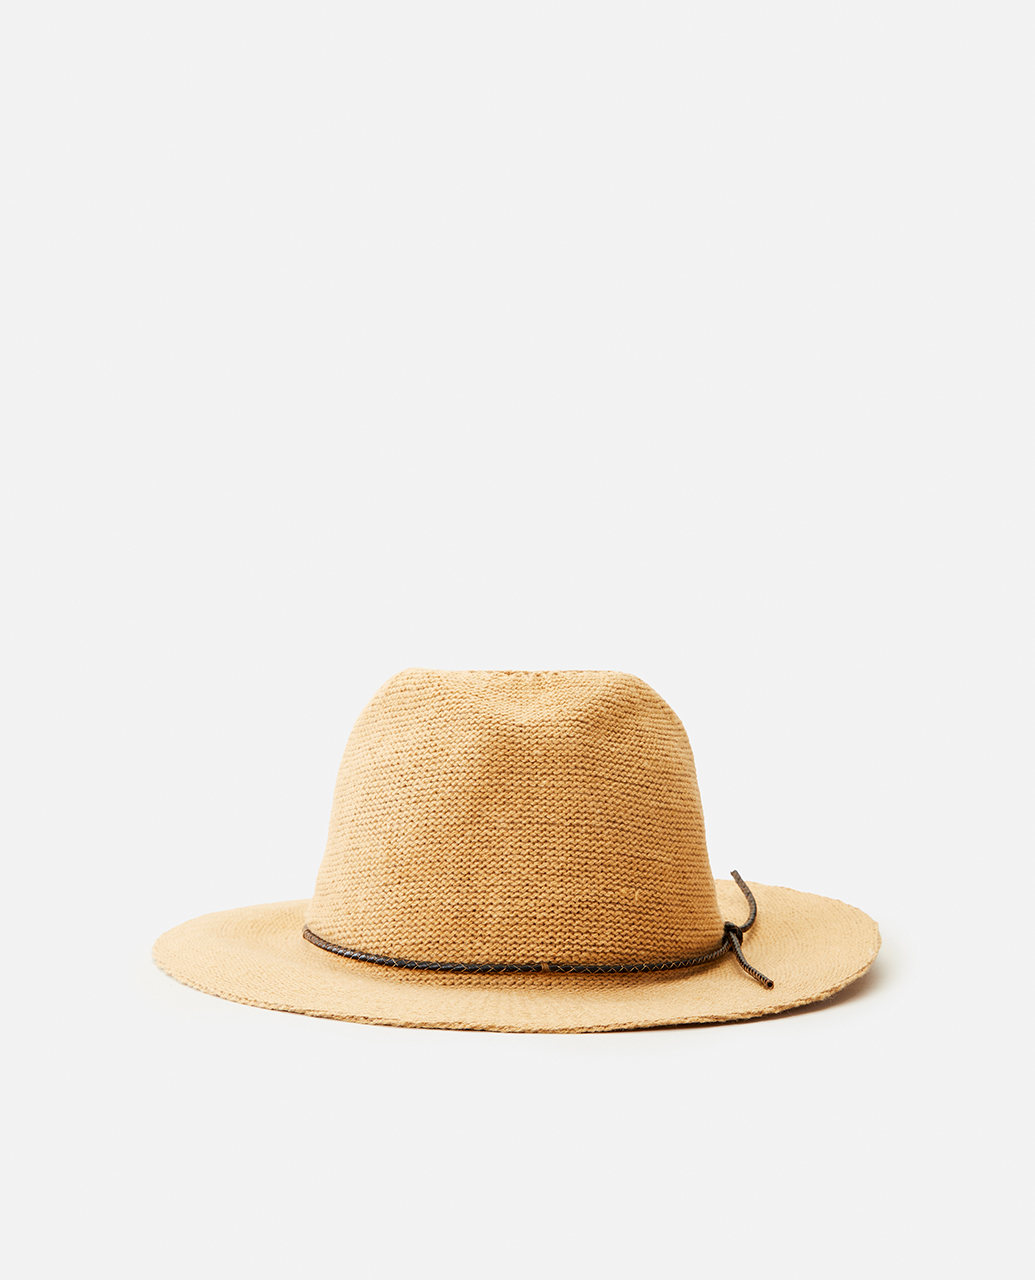 Women's Beach Hats | Straw Hats | Surf & Fashion Clothing | Ozmosis